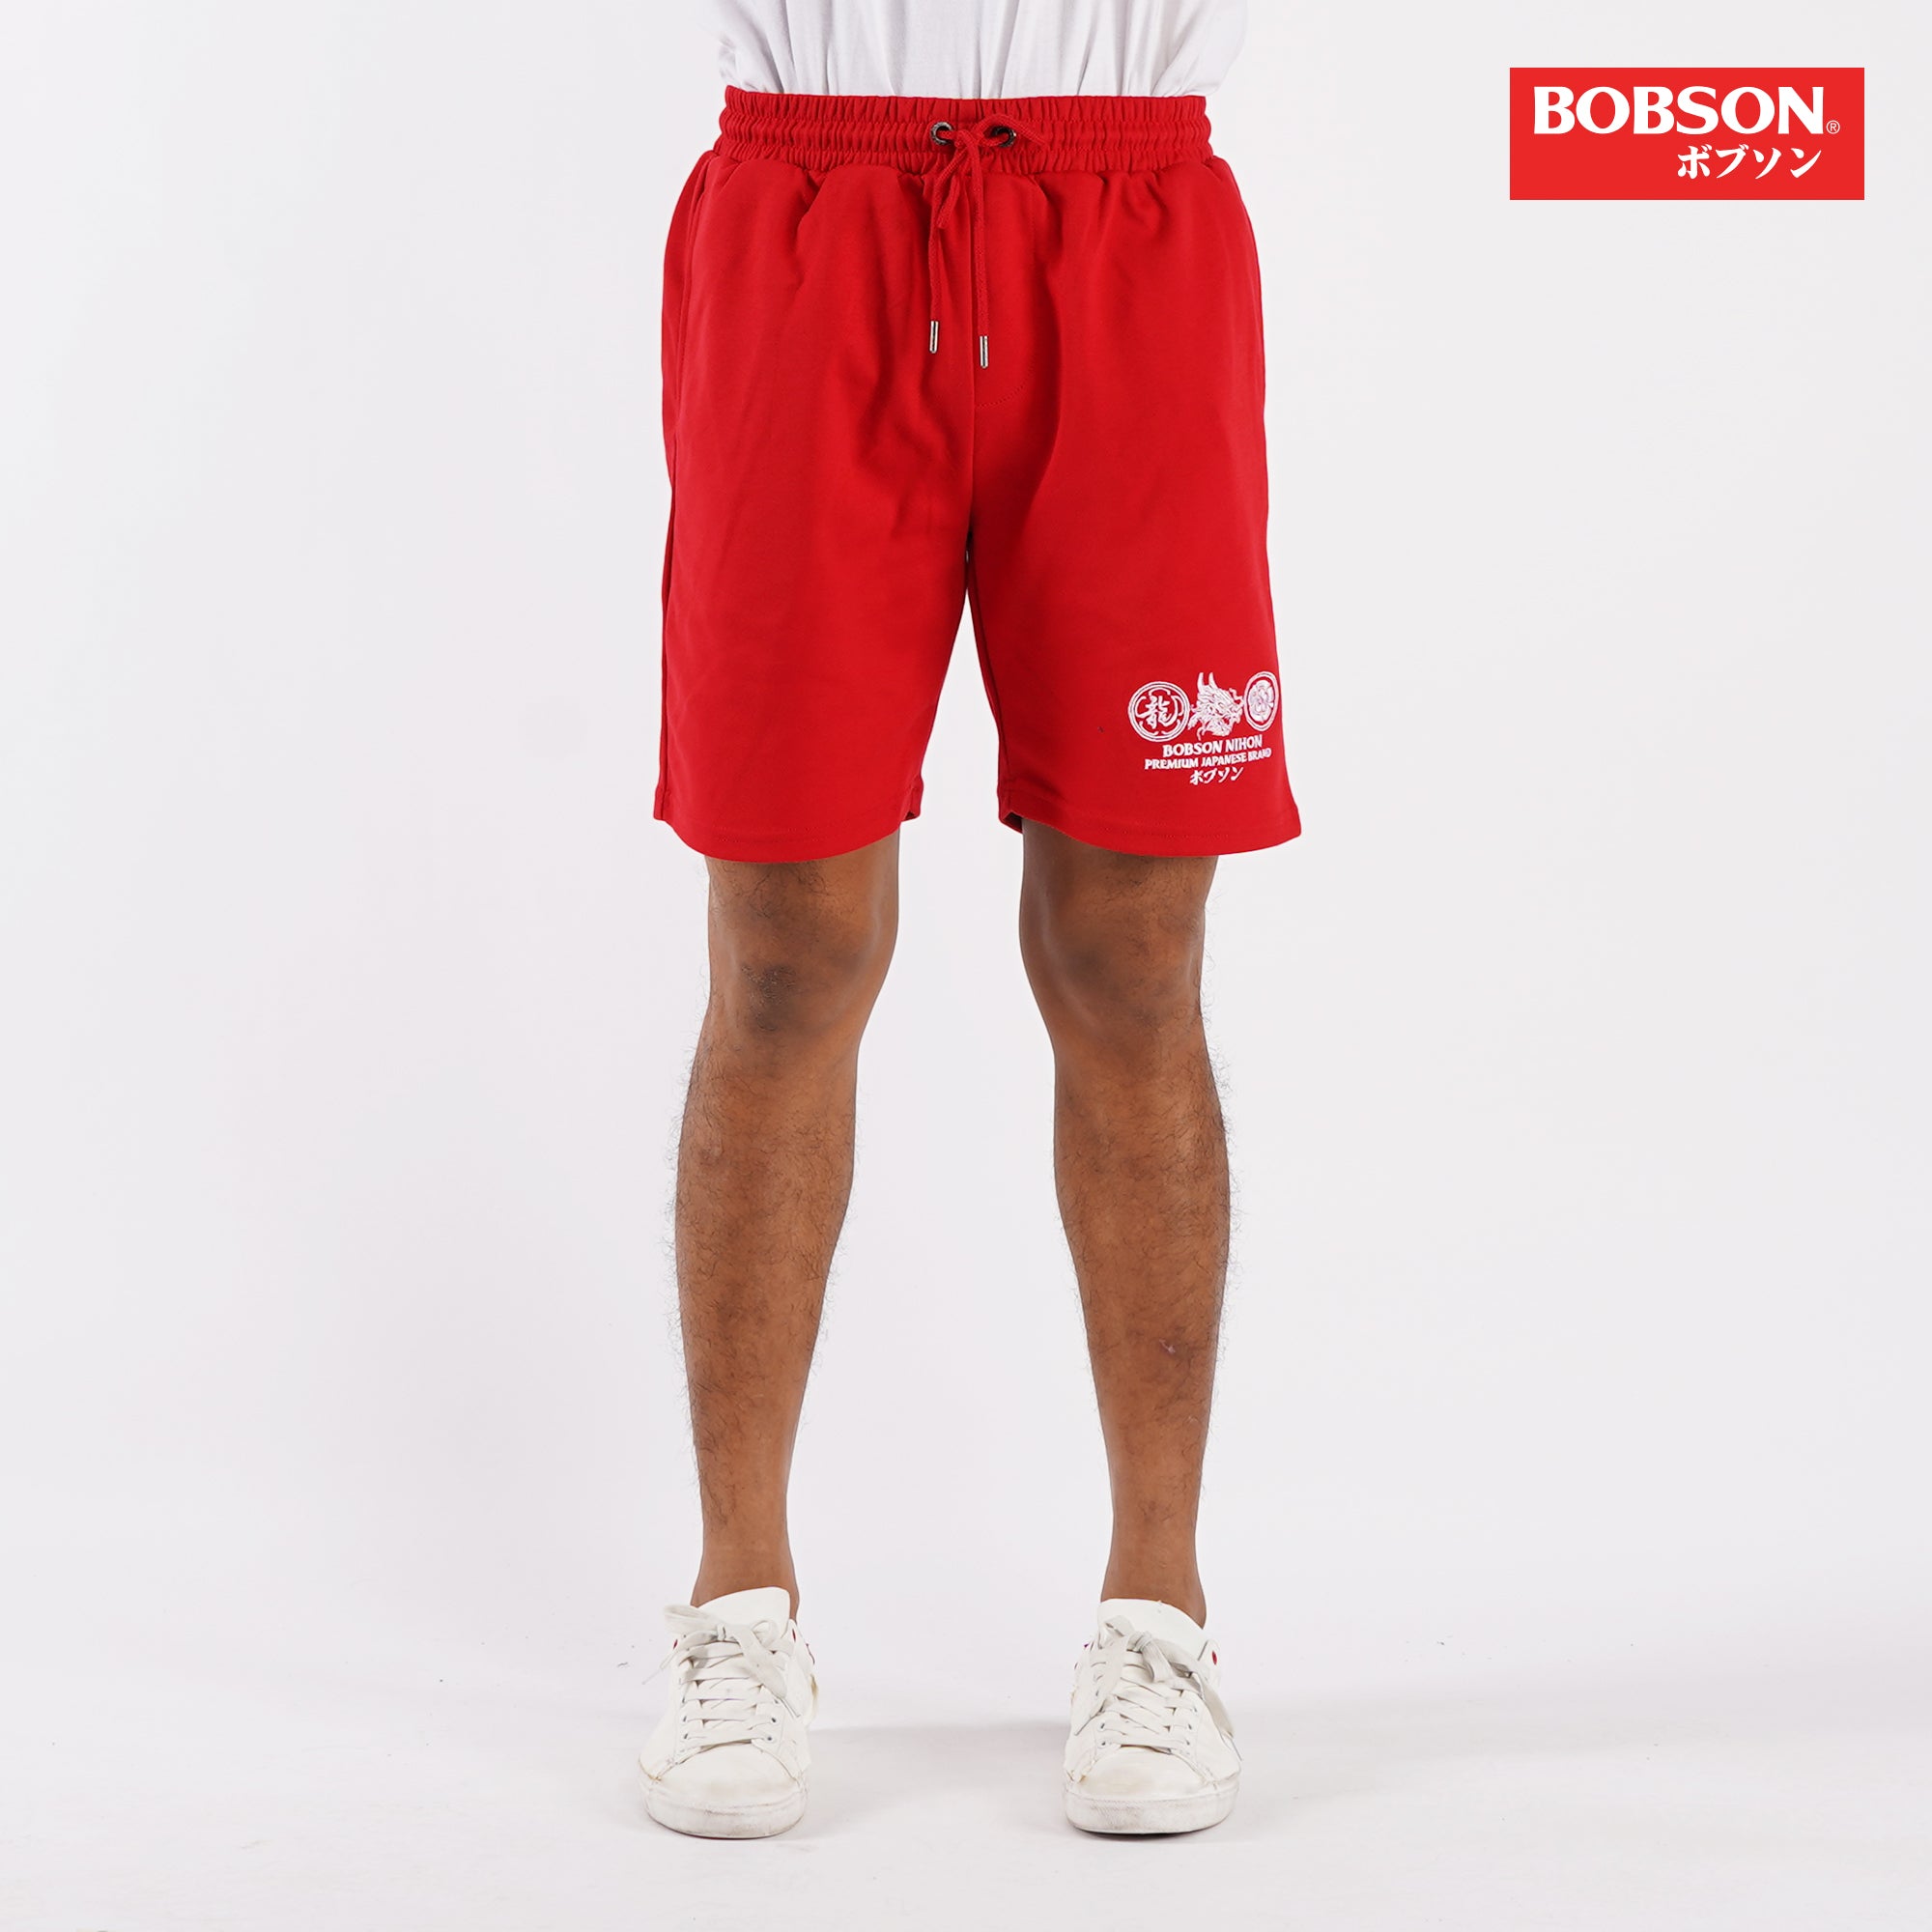 Bobson Japanese Men's Basic Non-Denim Interlock short for Men Trendy Fashion High Quality Apparel Comfortable Casual short for Men 121229 (Tango Red)